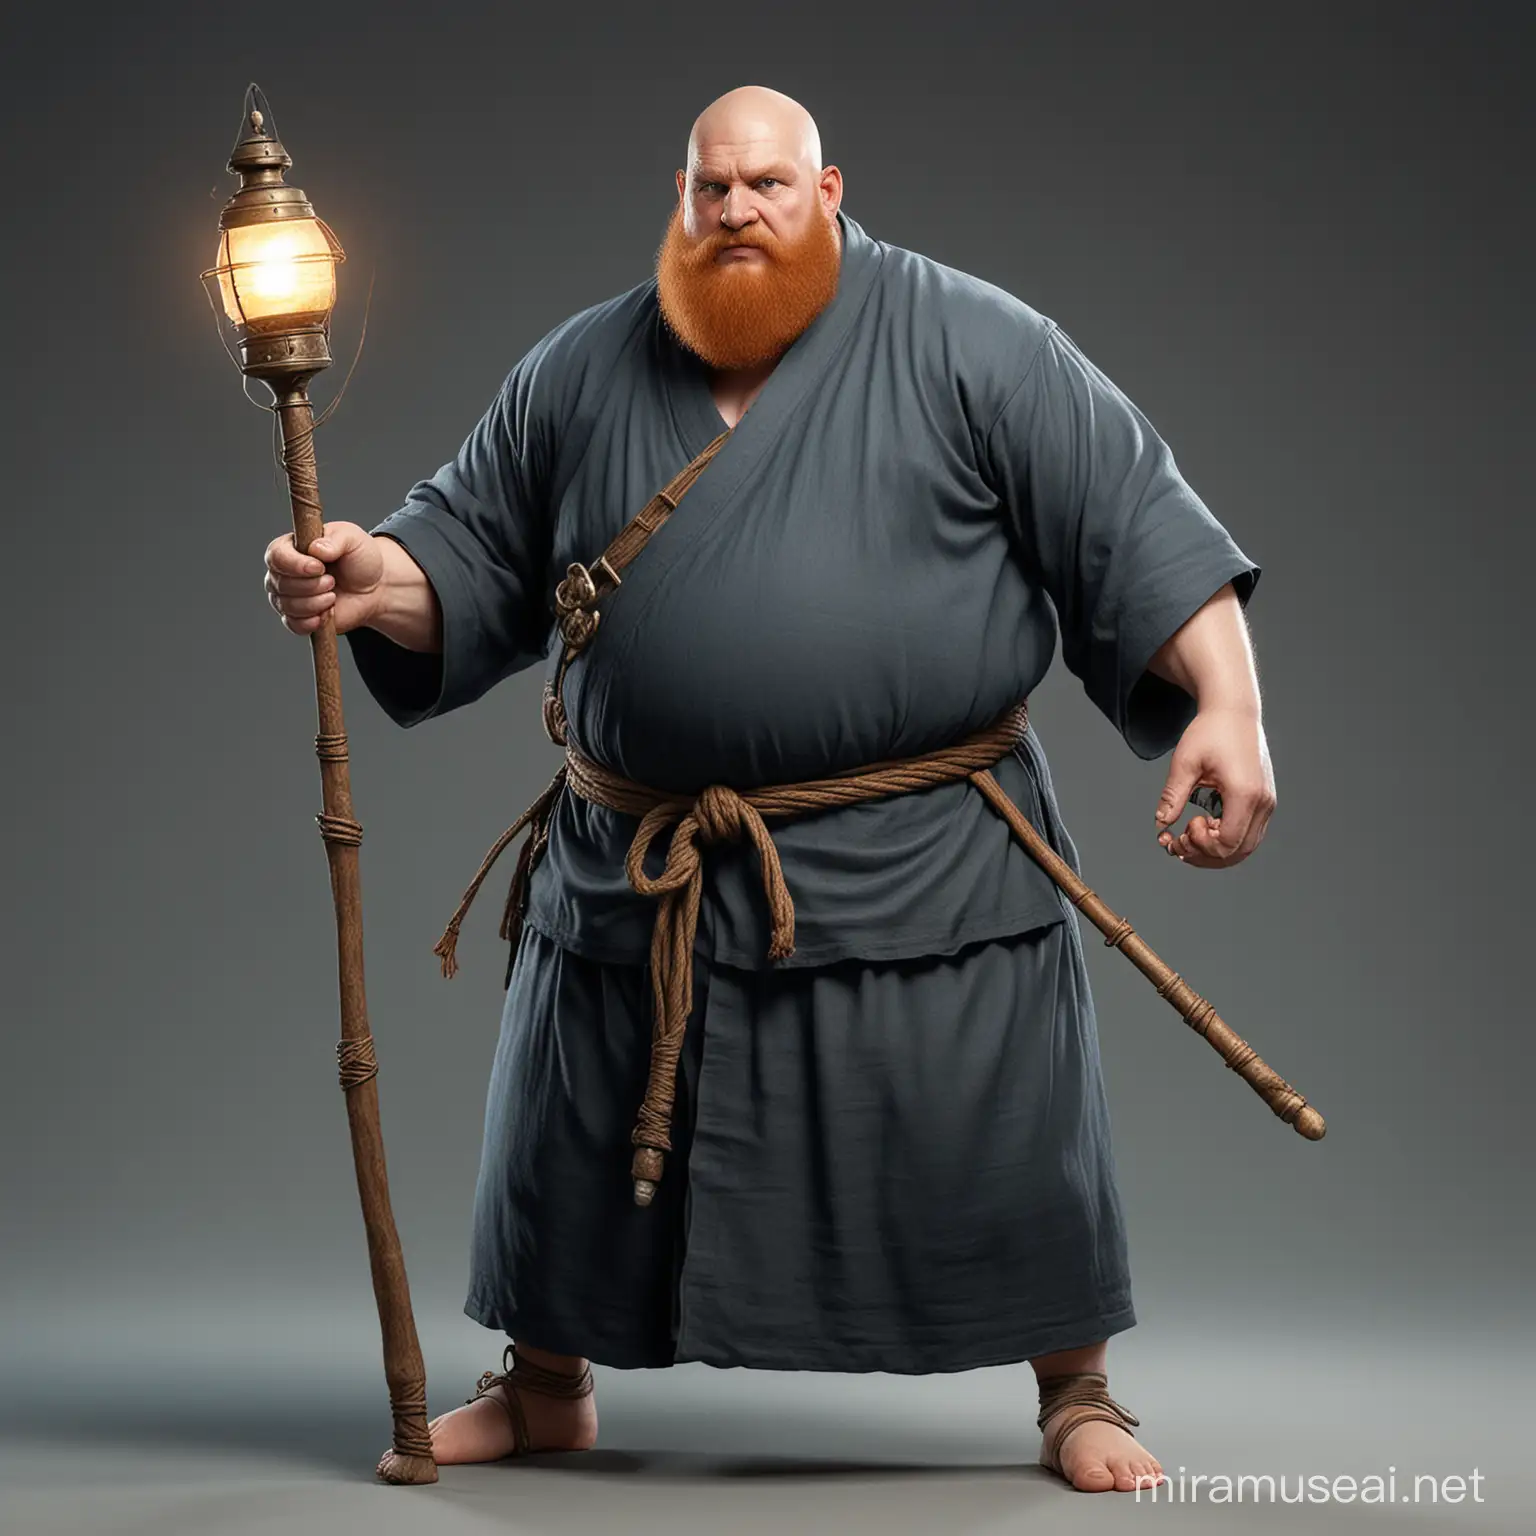 Monk in Vigorous Battle Pose with Lantern and Quarterstaff